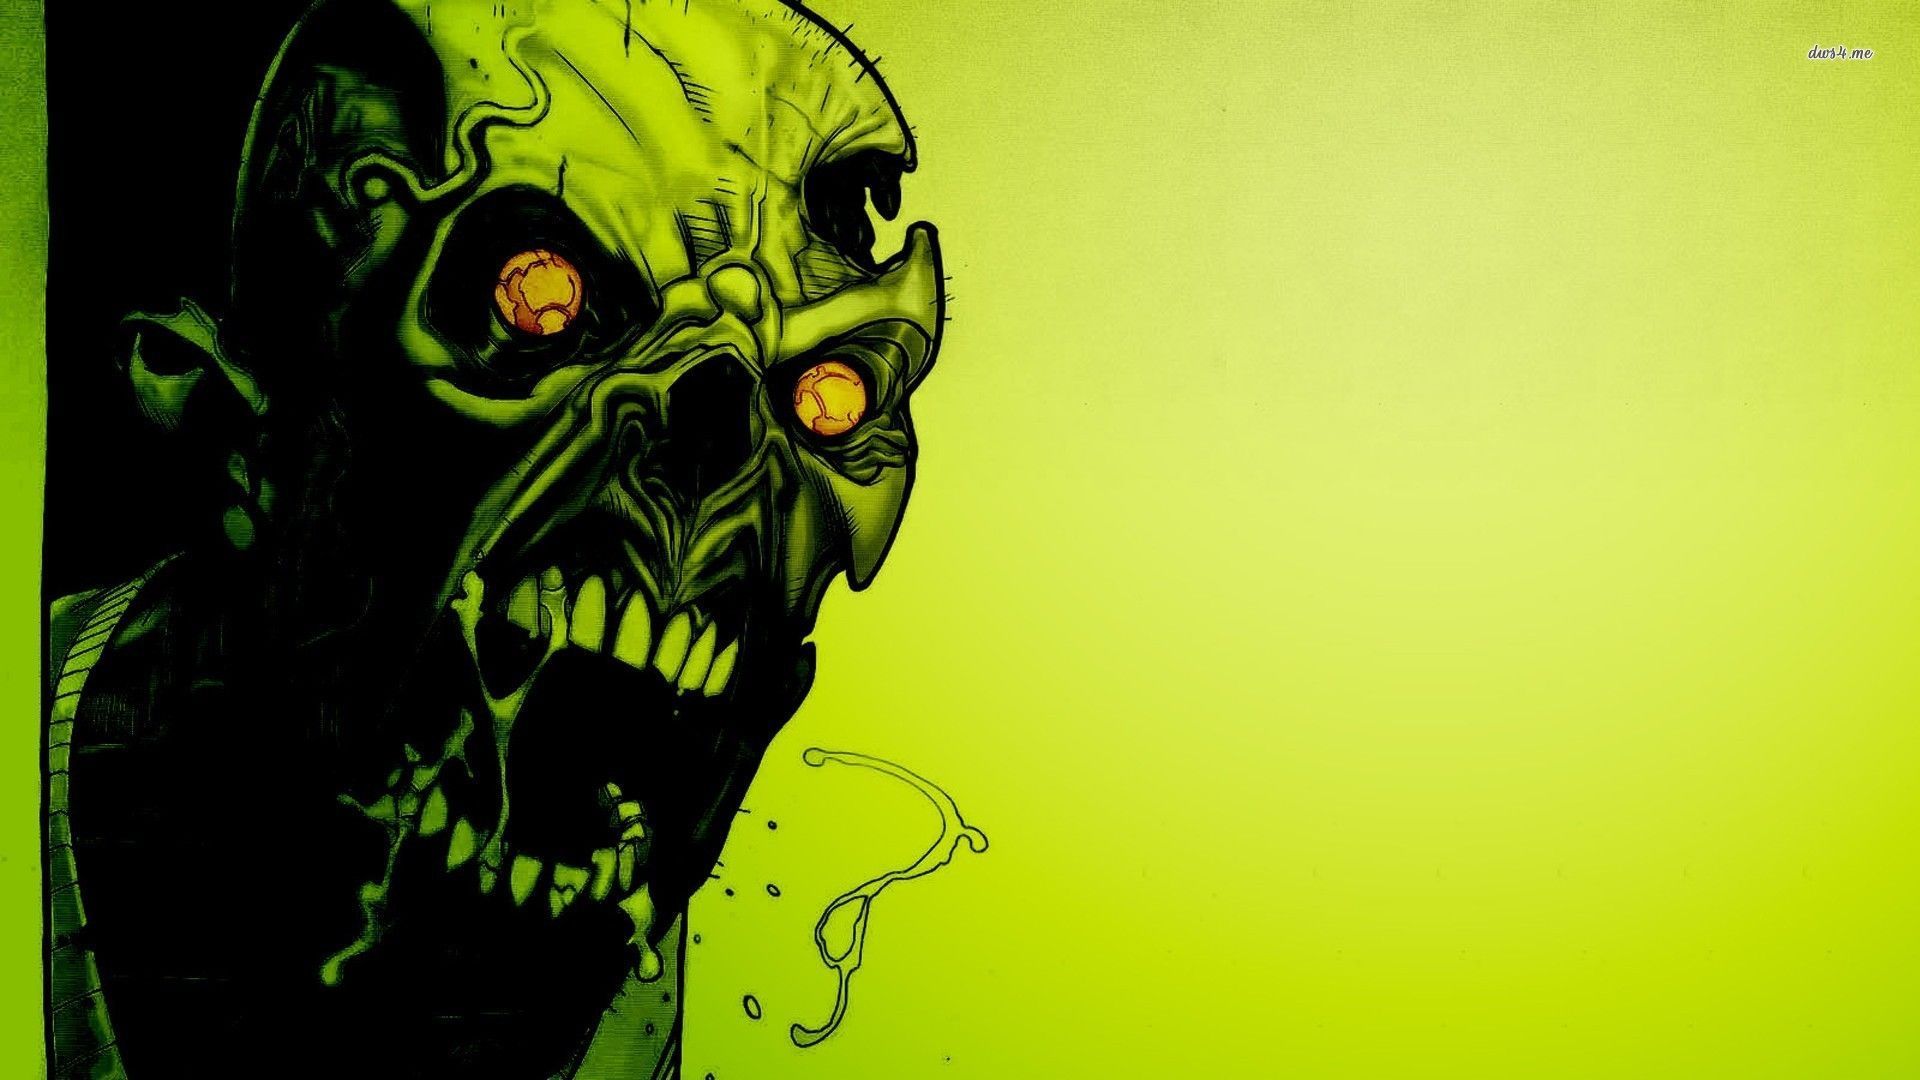 Screaming zombie wallpaper - Digital Art wallpapers -